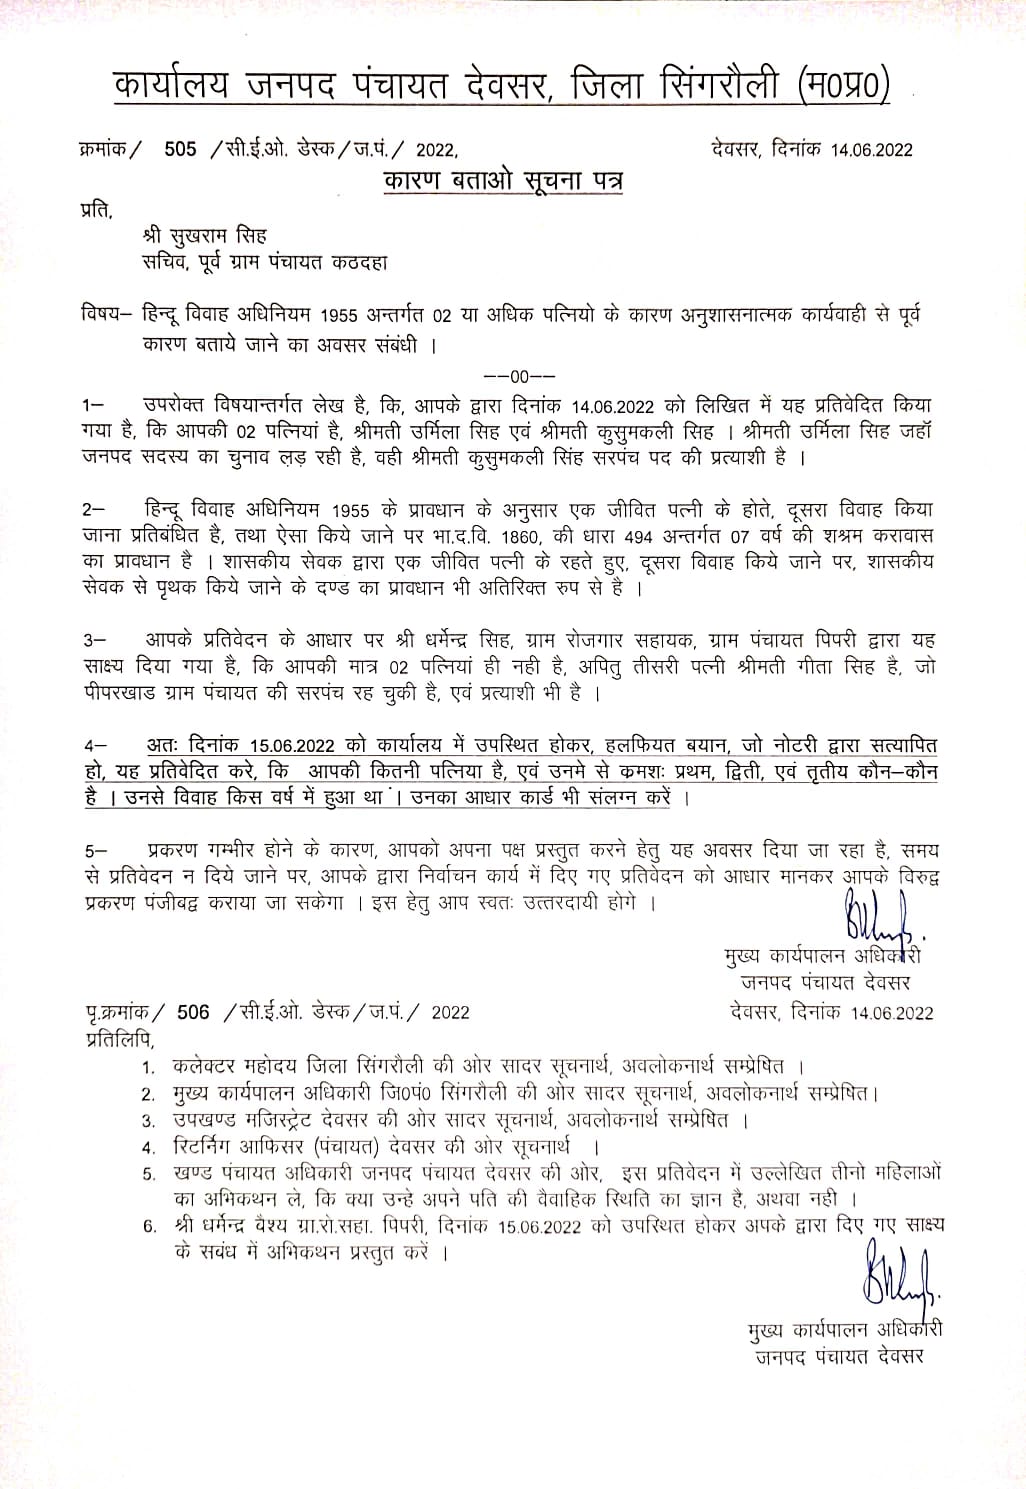 Notice to Secretary against Hindu Act